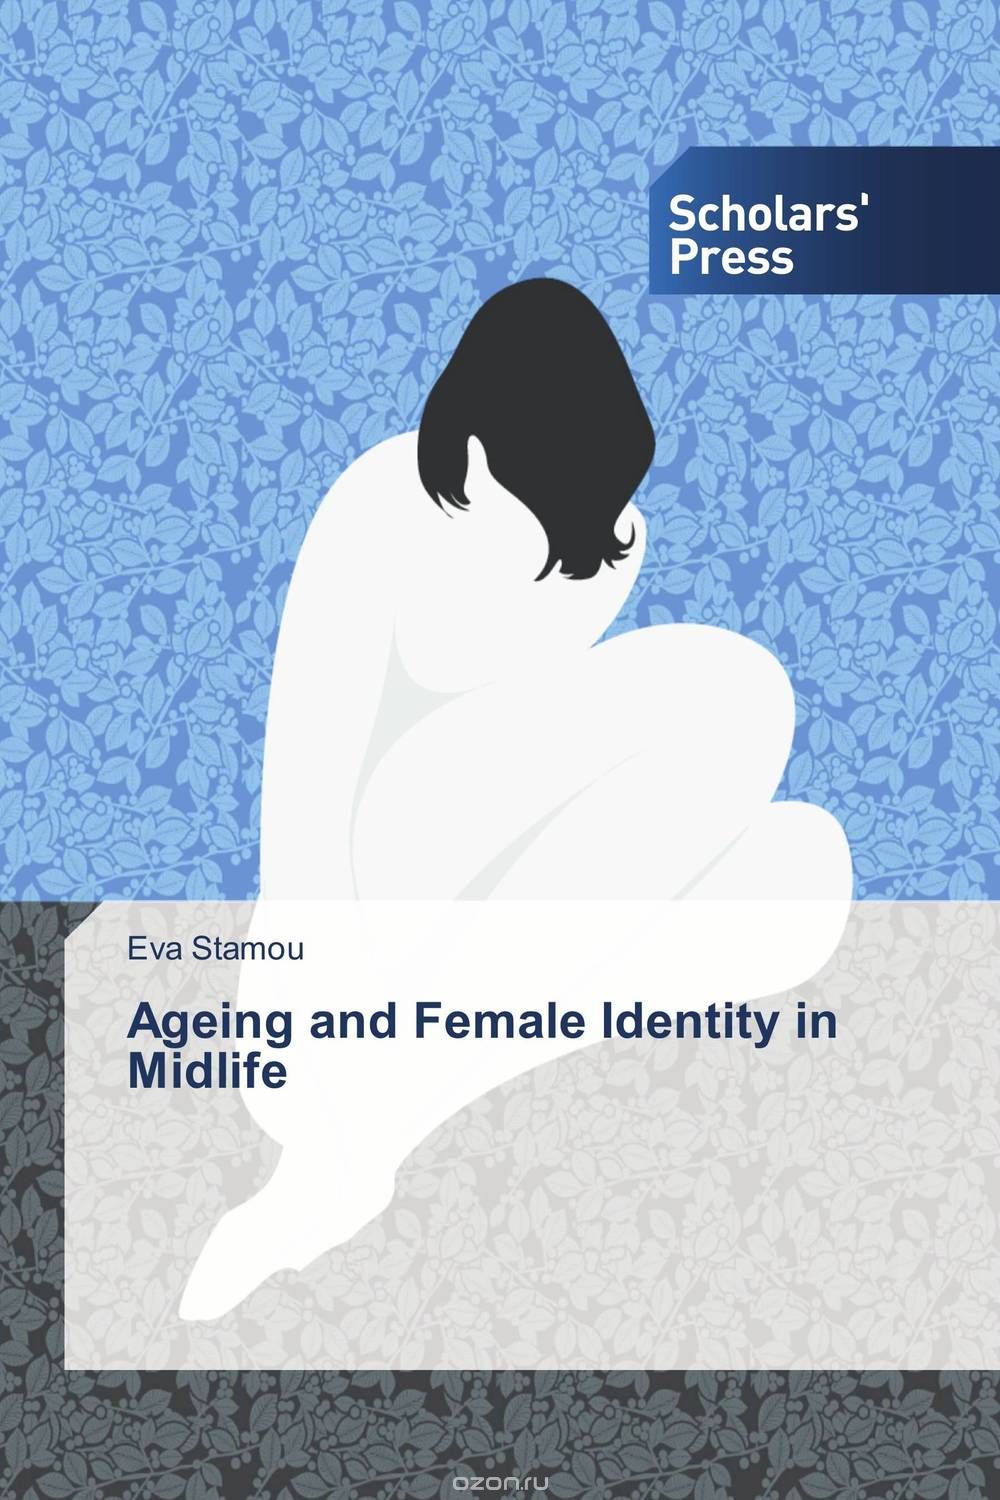 Скачать книгу "Ageing and Female Identity in Midlife"